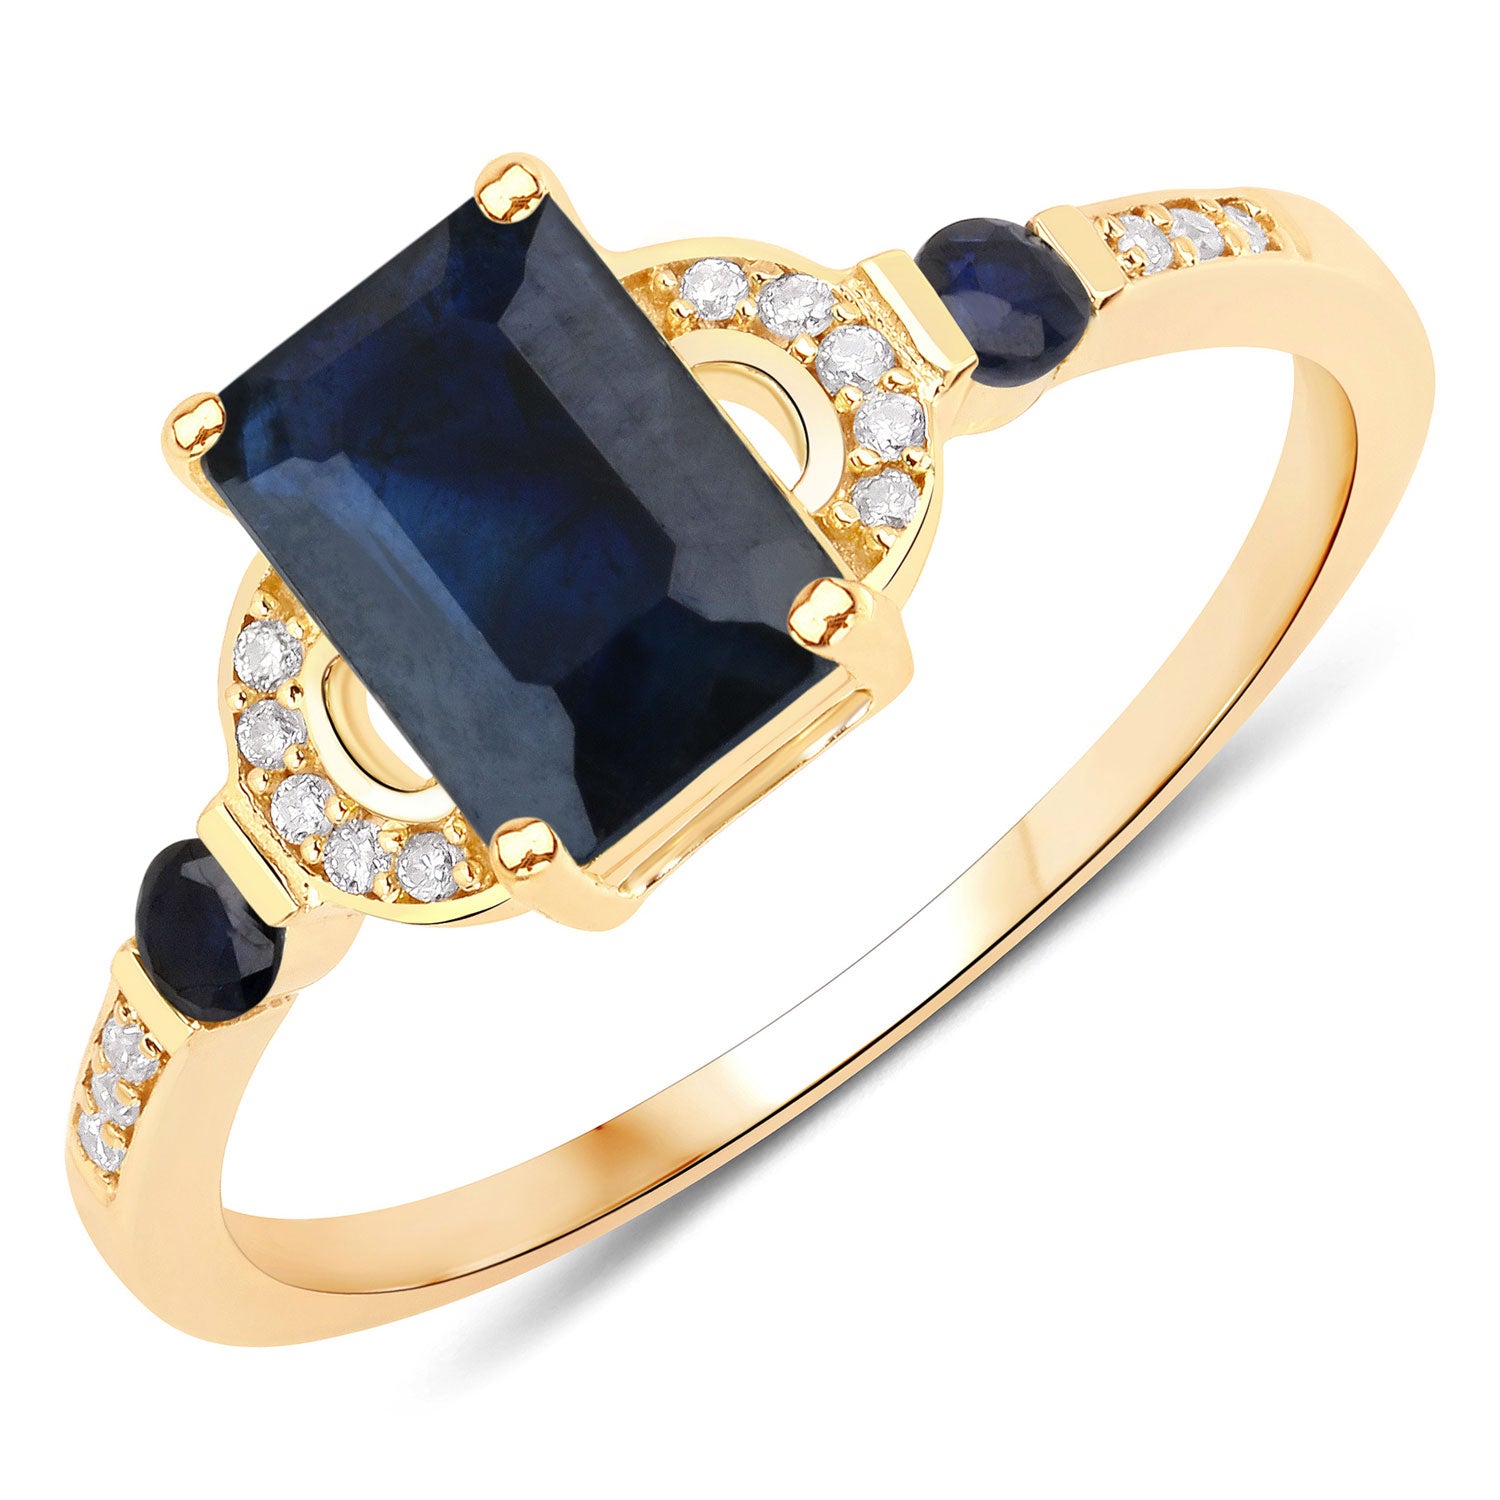 1.64 Carat Genuine Blue Sapphire and White Diamond 14K Yellow Gold Ring